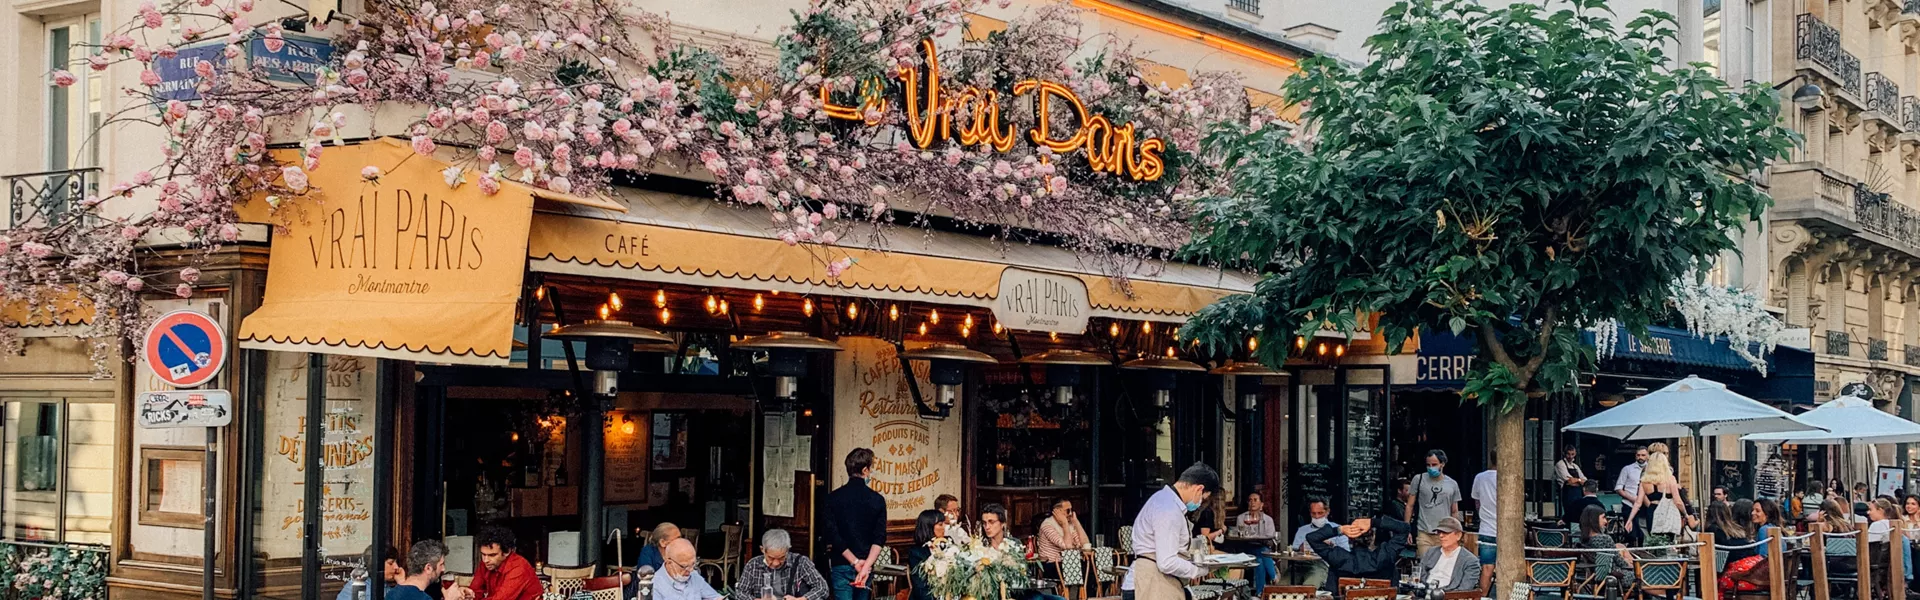 Cafe in Paris, France